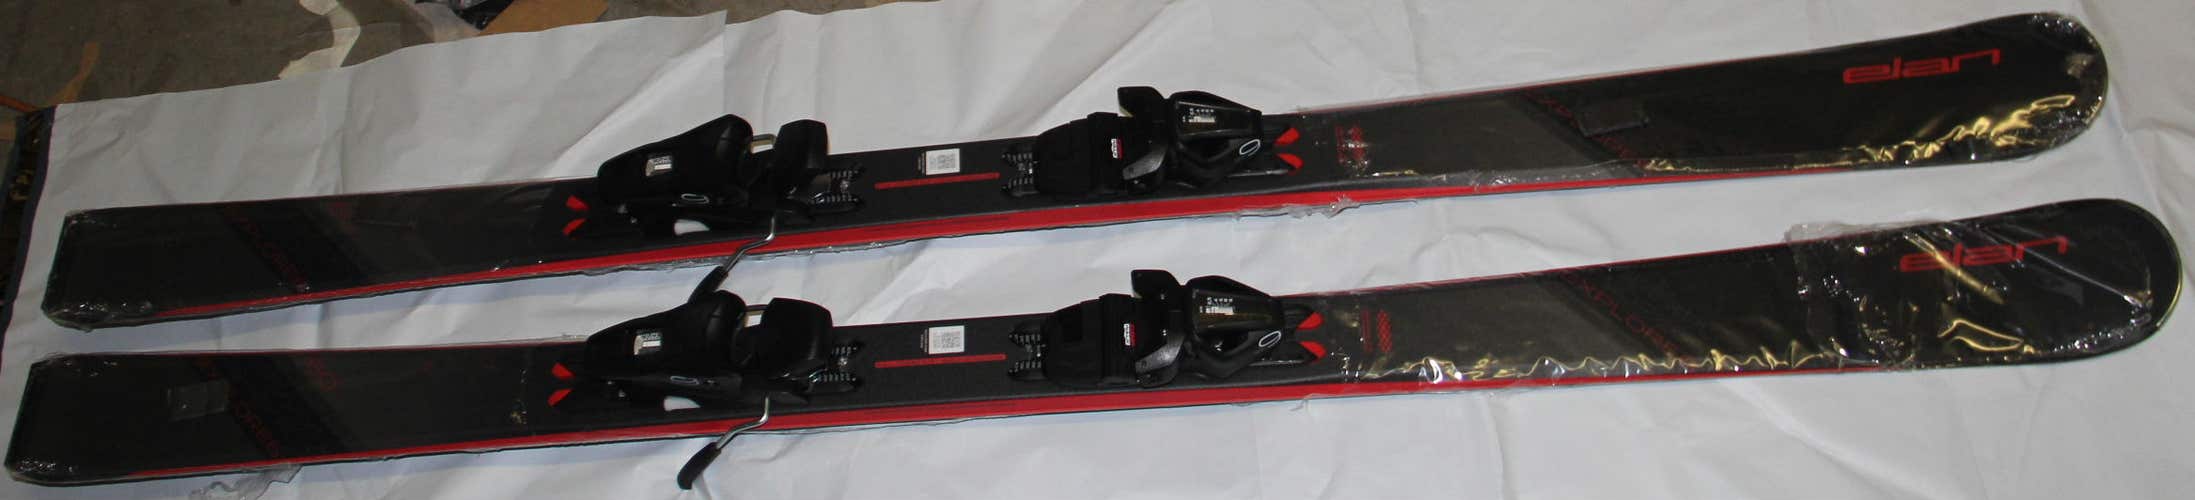 NEW Elan Explore 6 red 168cm skis men's with EL 9.0 GW size adjustable bindings